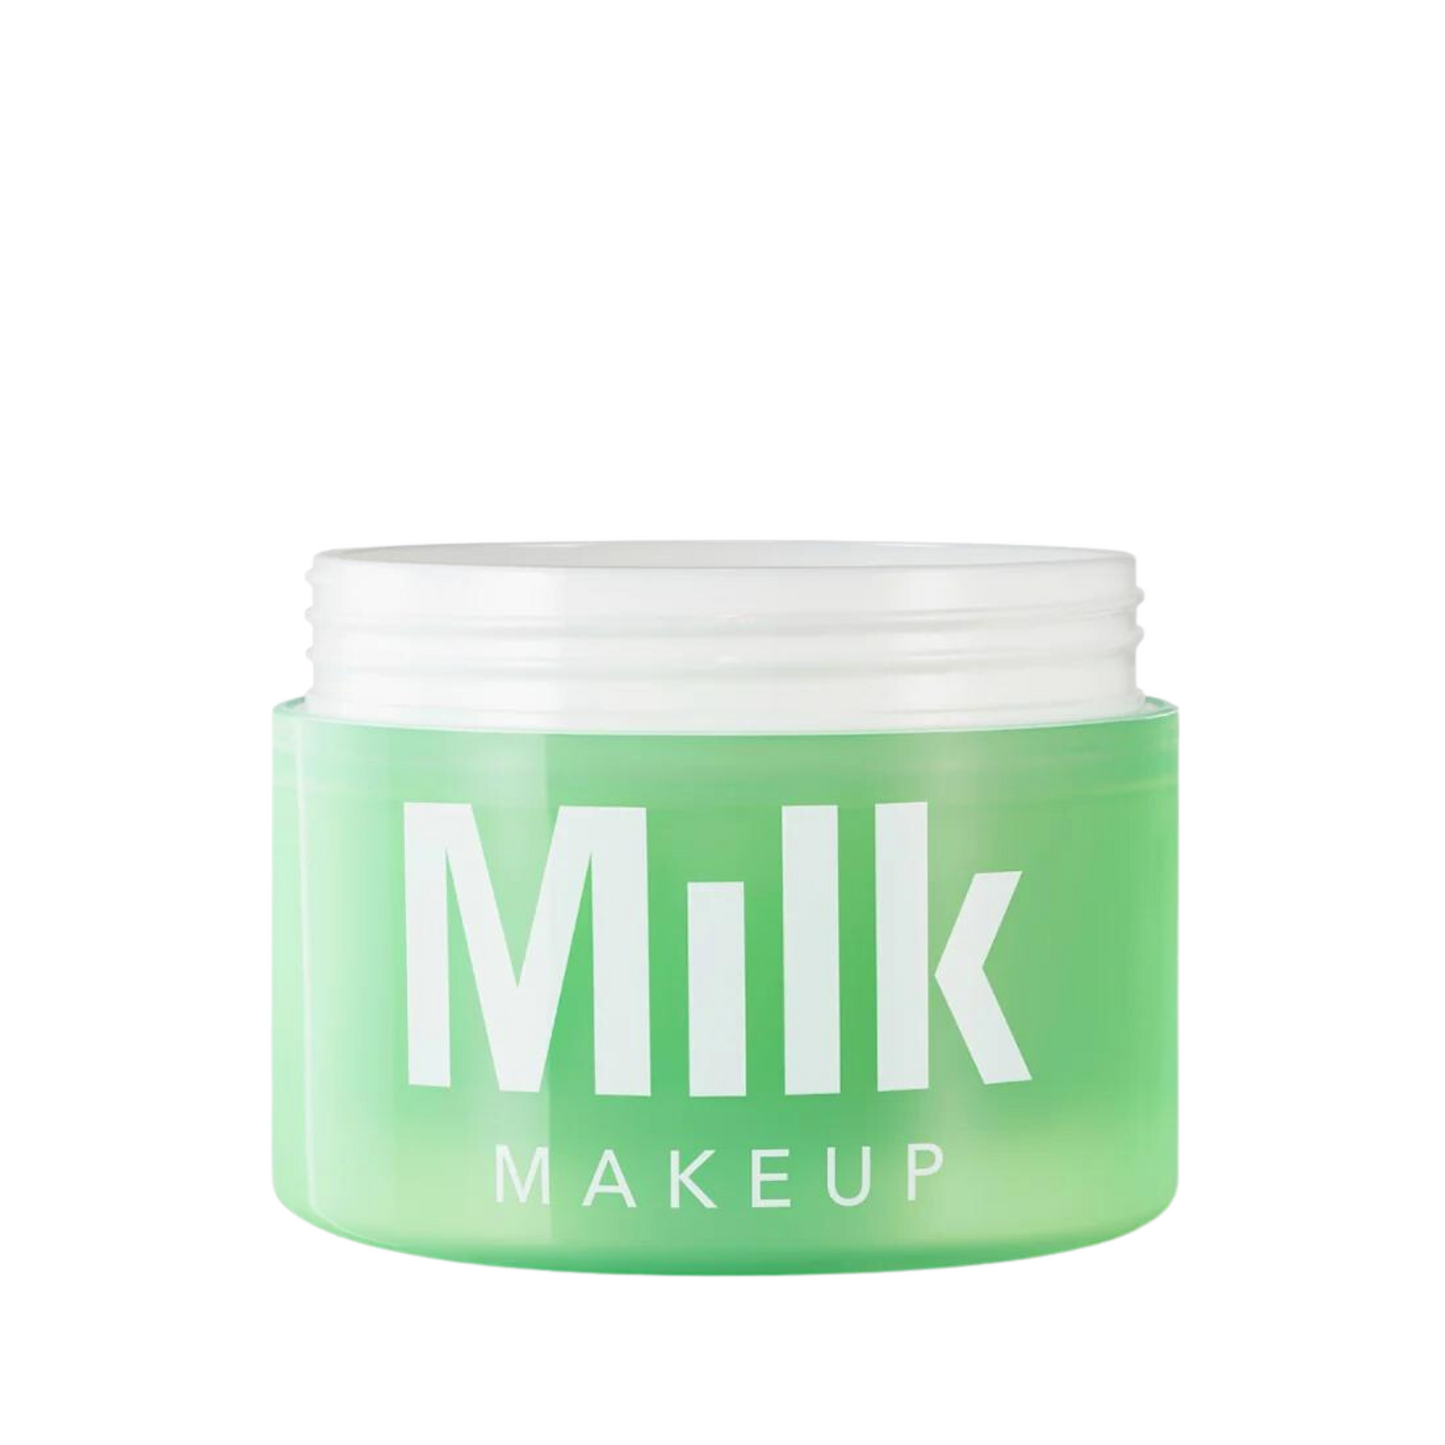 MILK MAKEUP - Hydro Ungrip Makeup Removing Cleansing Balm